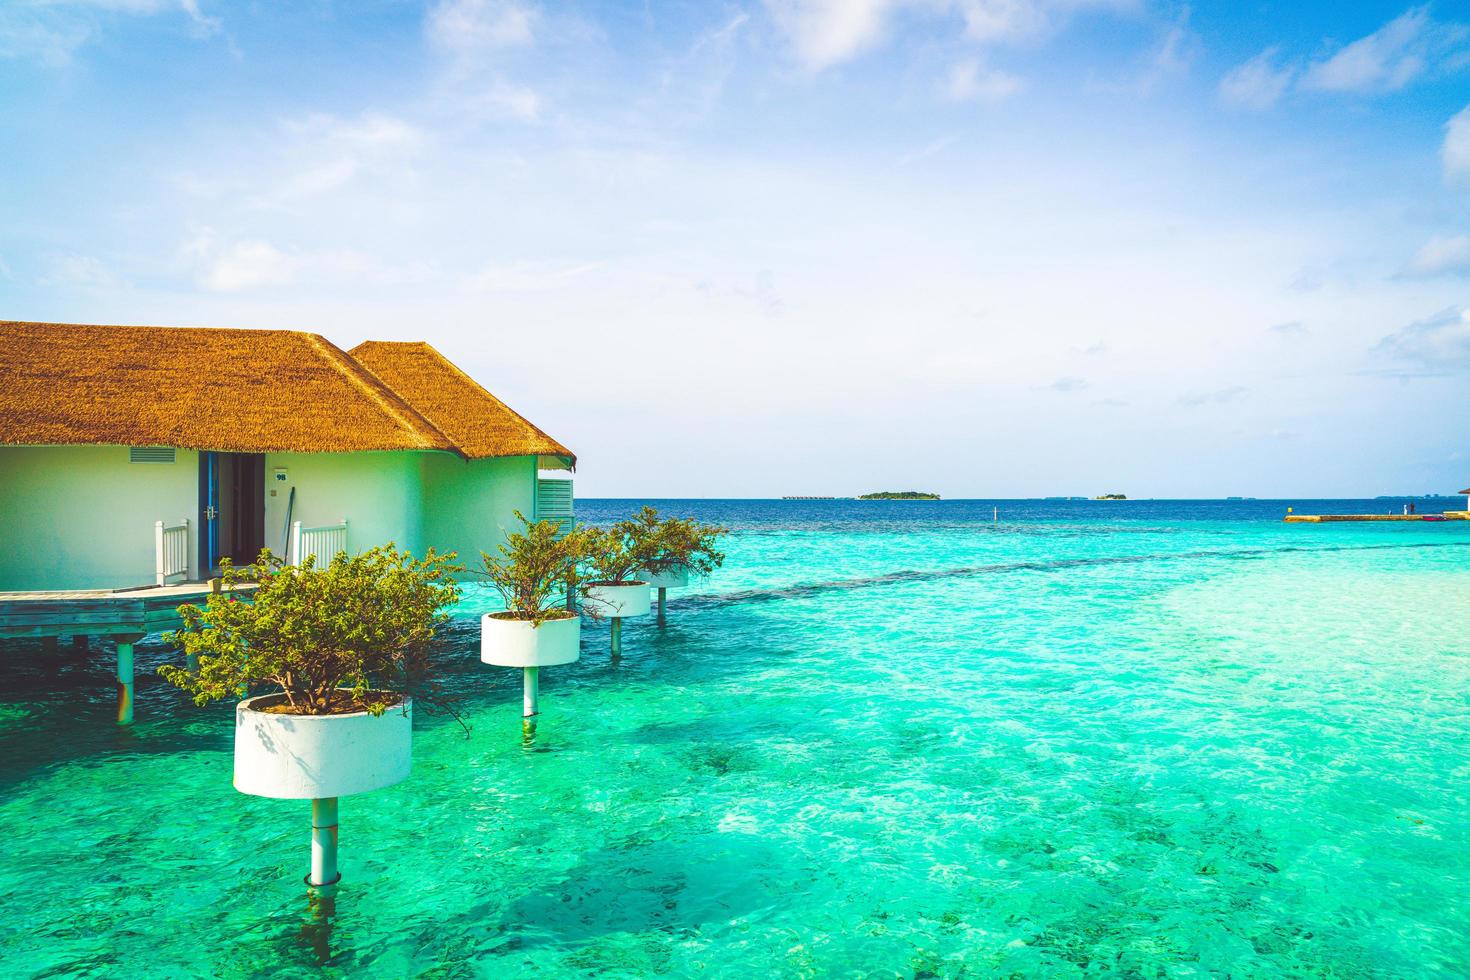 Beautiful tropical Maldives resort hotel and island with beach and sea photo